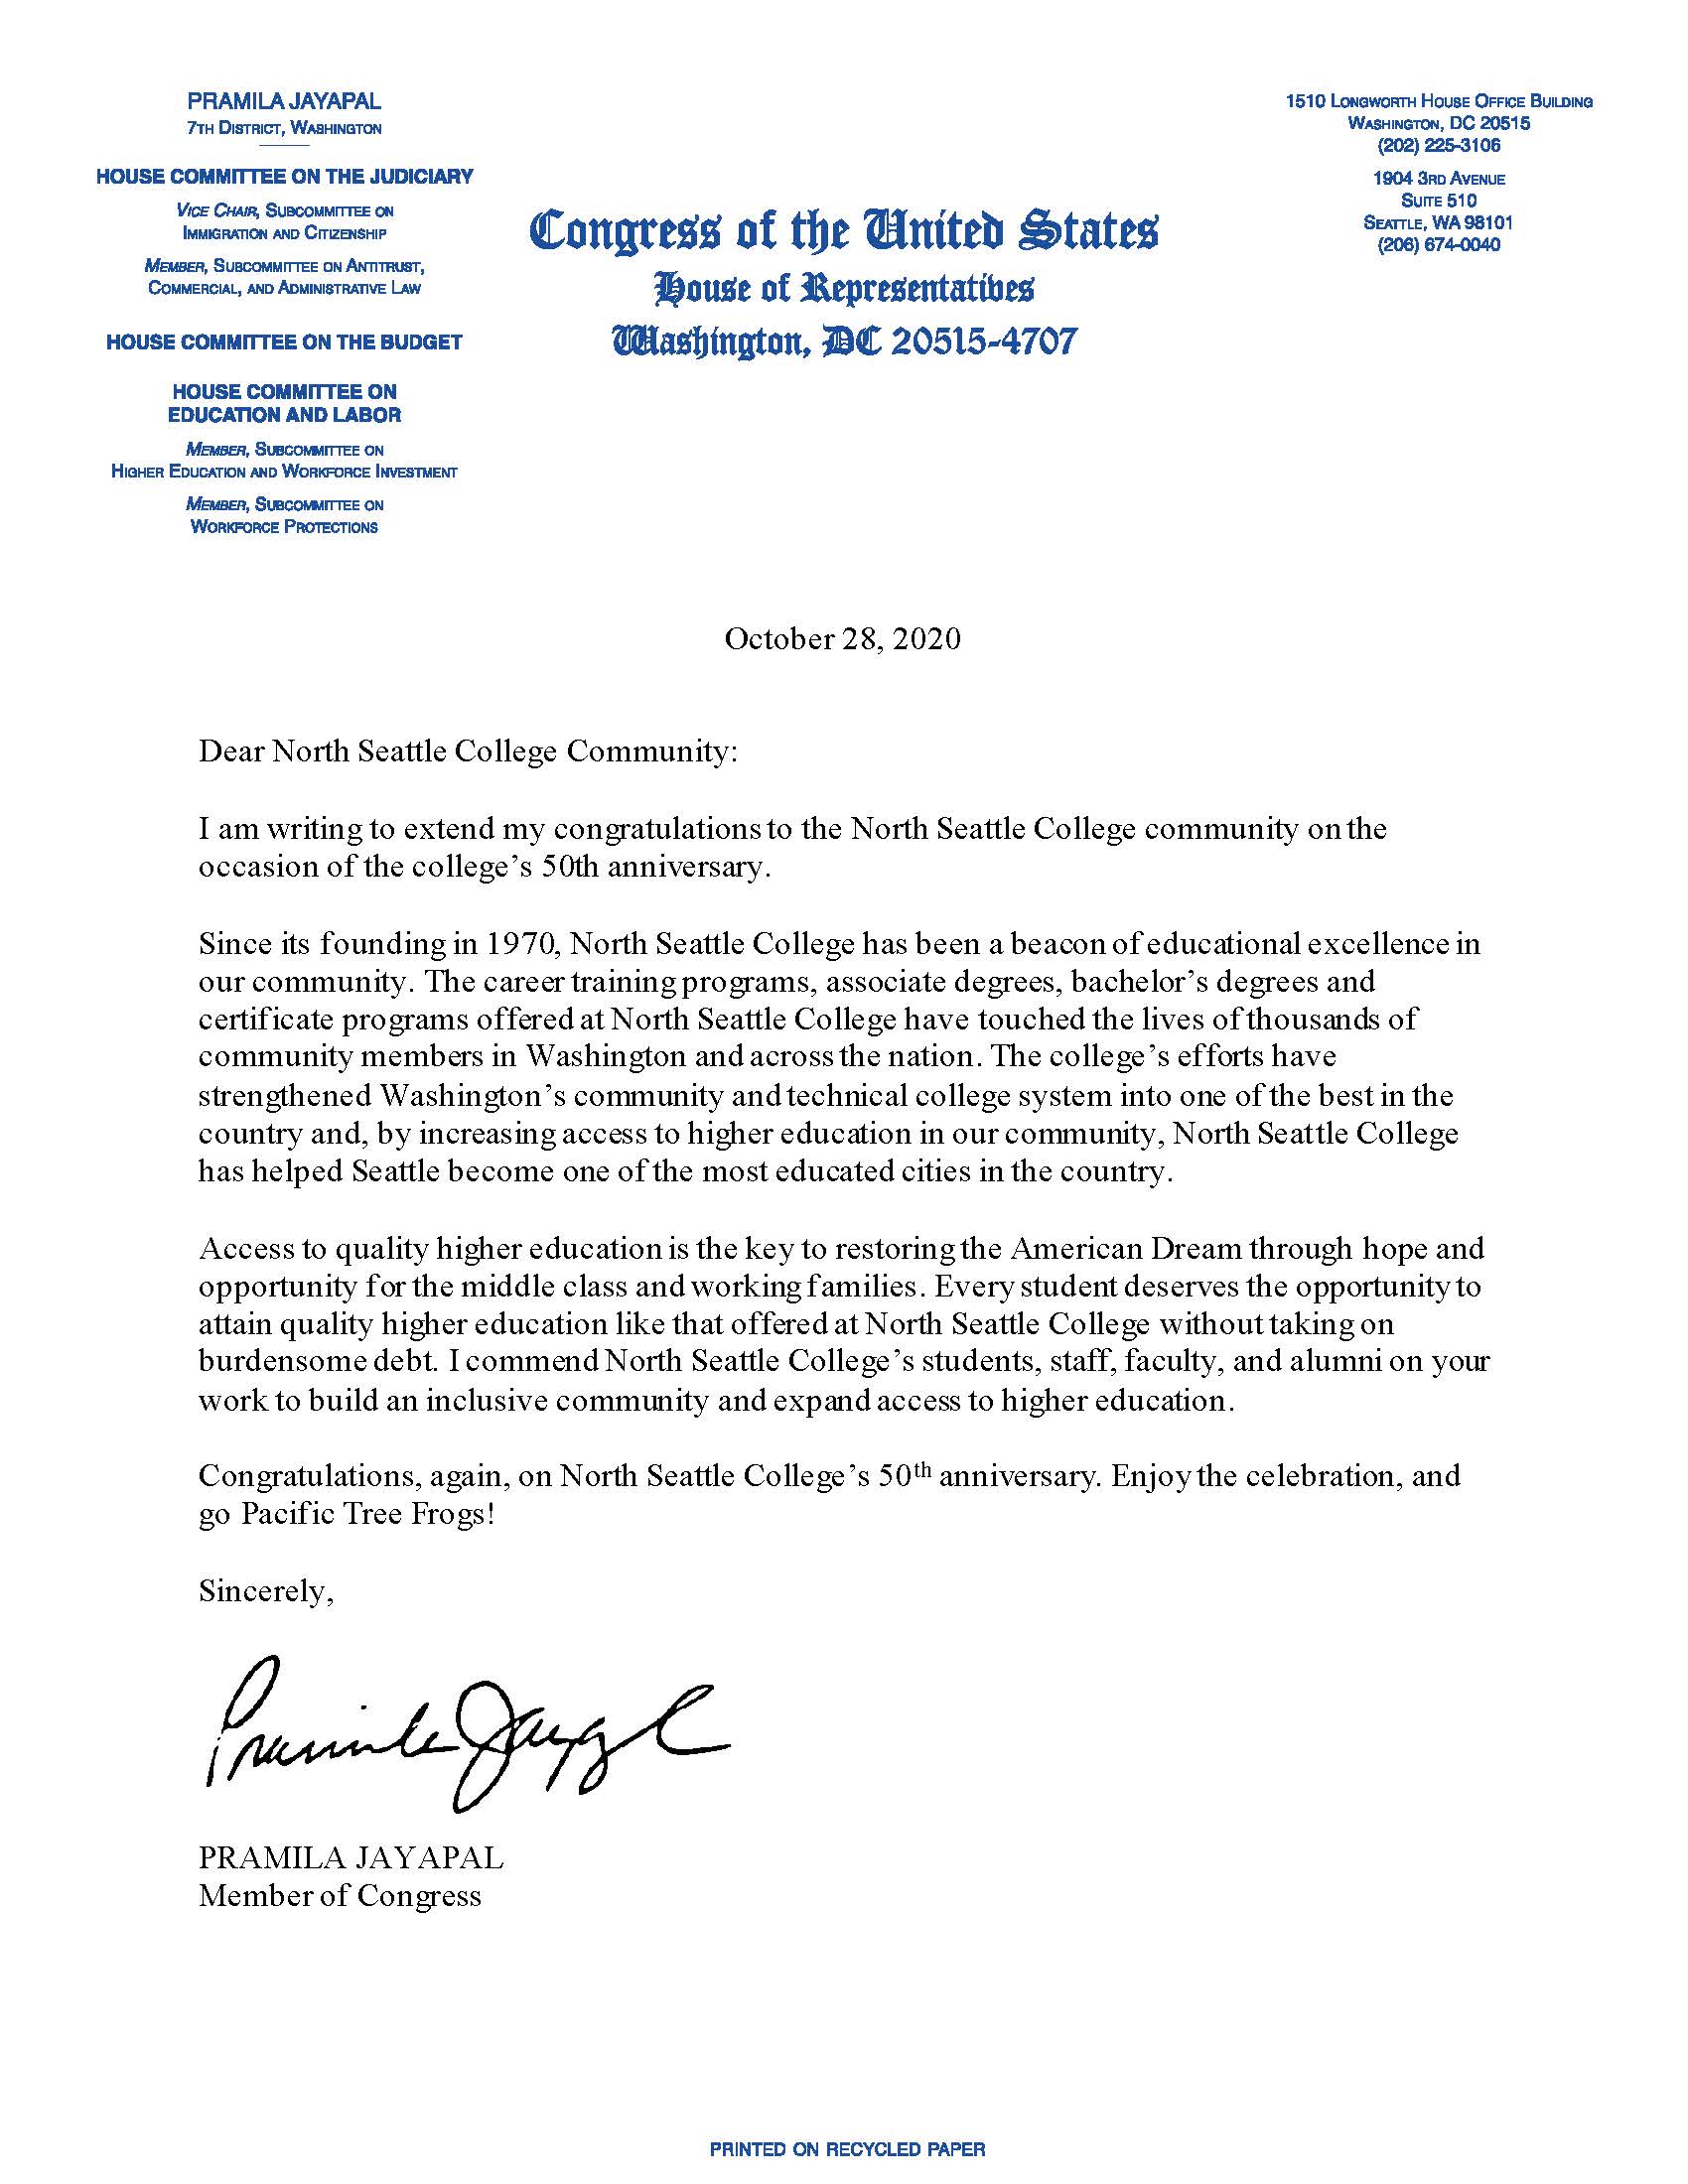 Letter from Congresswoman Pramila Jayapal